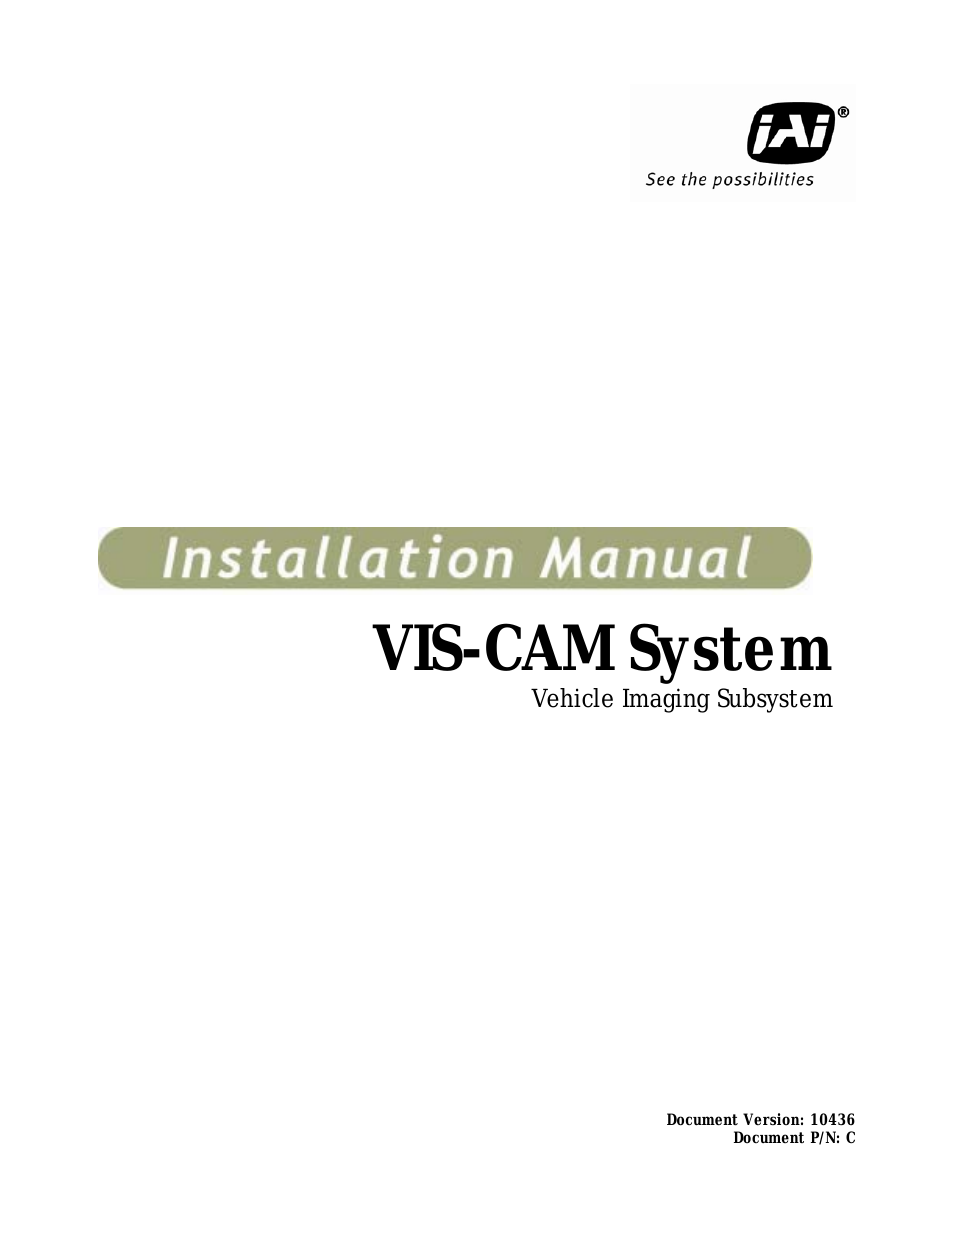 VIS-CAM System TS-1327EN